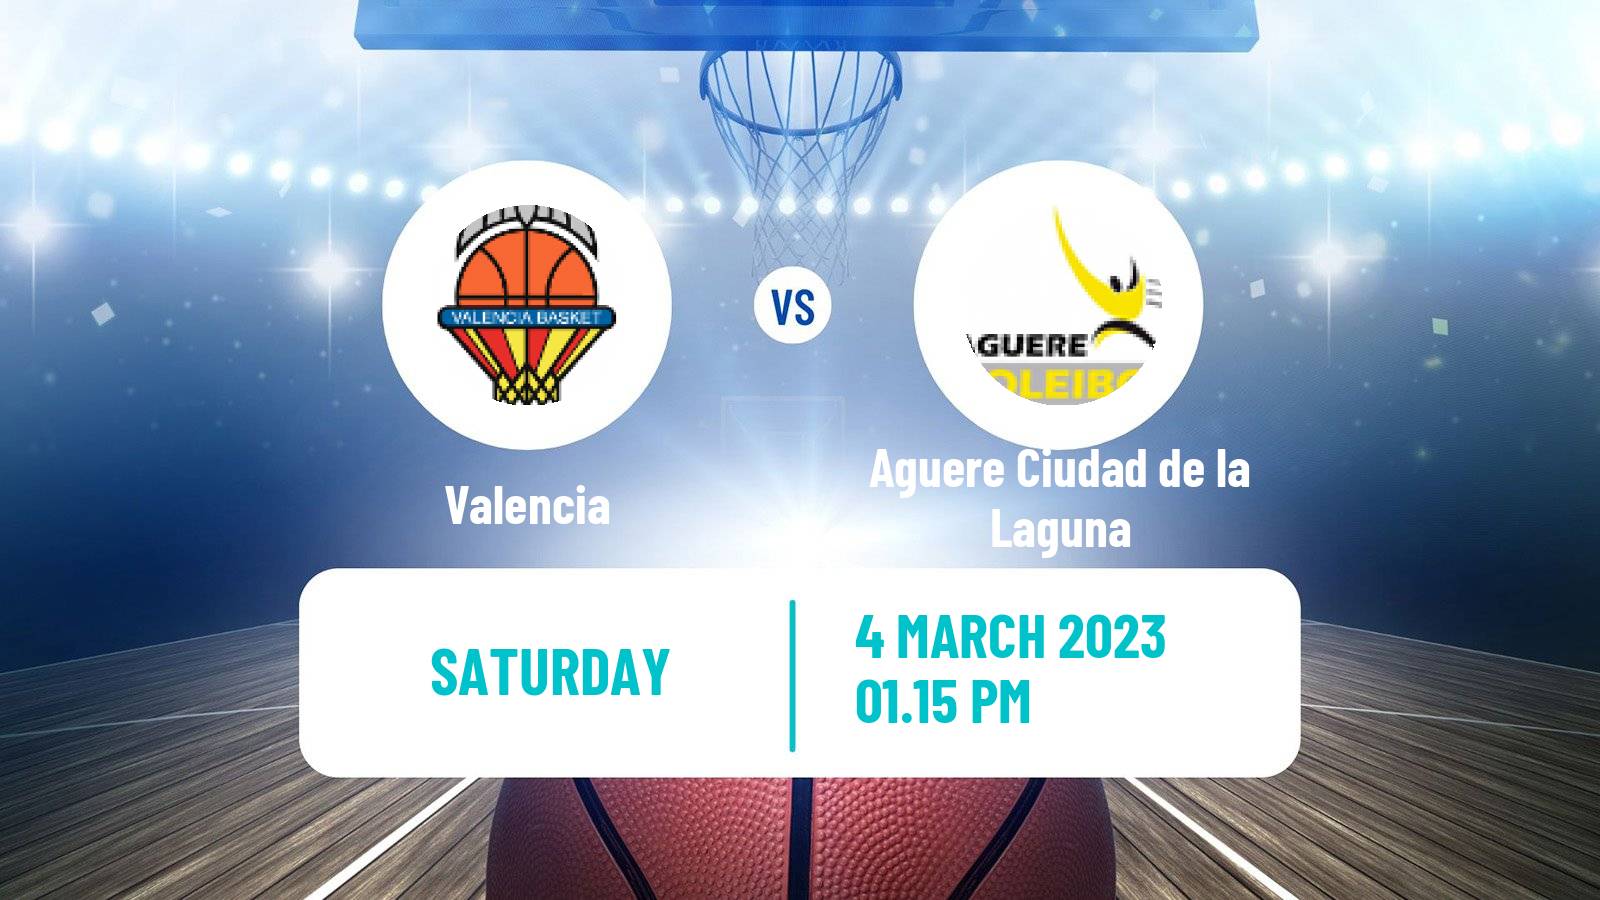 Basketball Spanish Liga Femenina Basketball Valencia - Aguere Ciudad de la Laguna